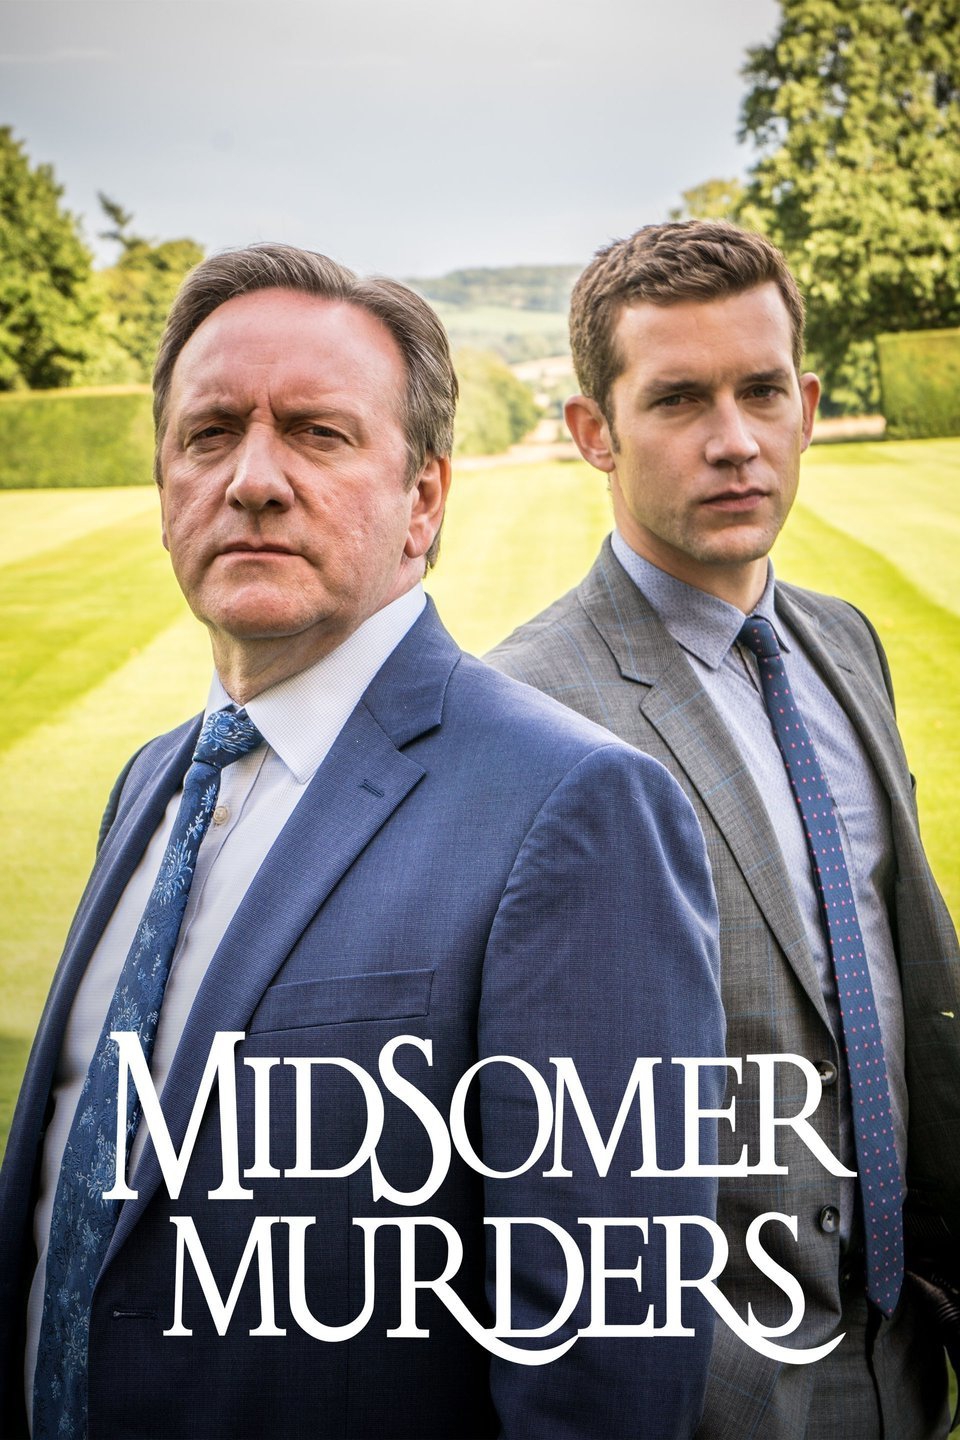 Midsomer Murders Cast 2019 Midsomer Murders Season 21 Release Date - Riset